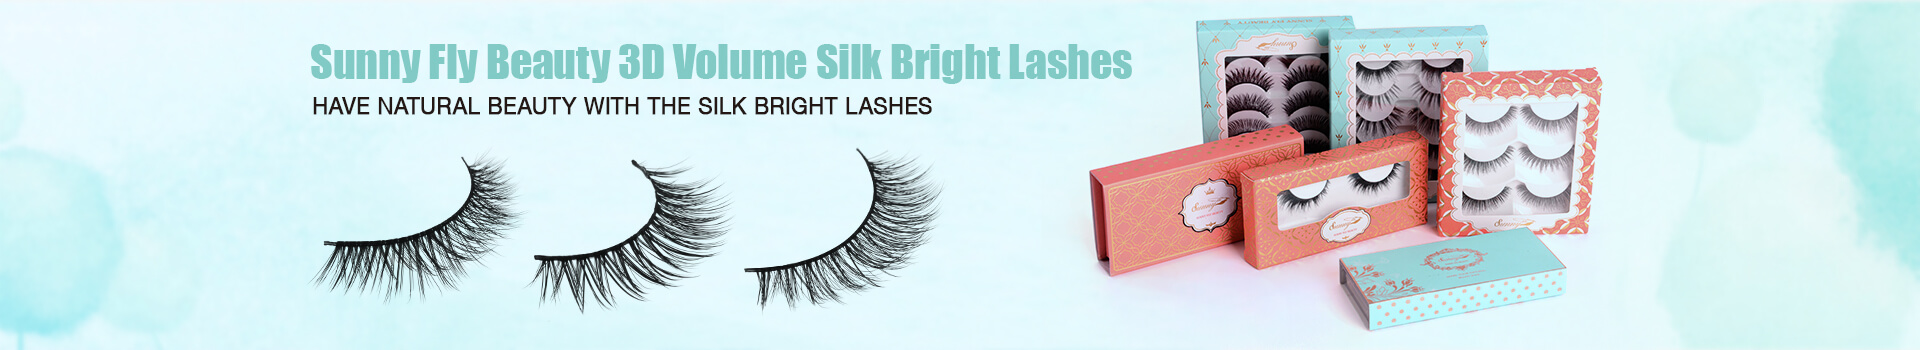 3D Volume Silk Bright Eyelashes FA21